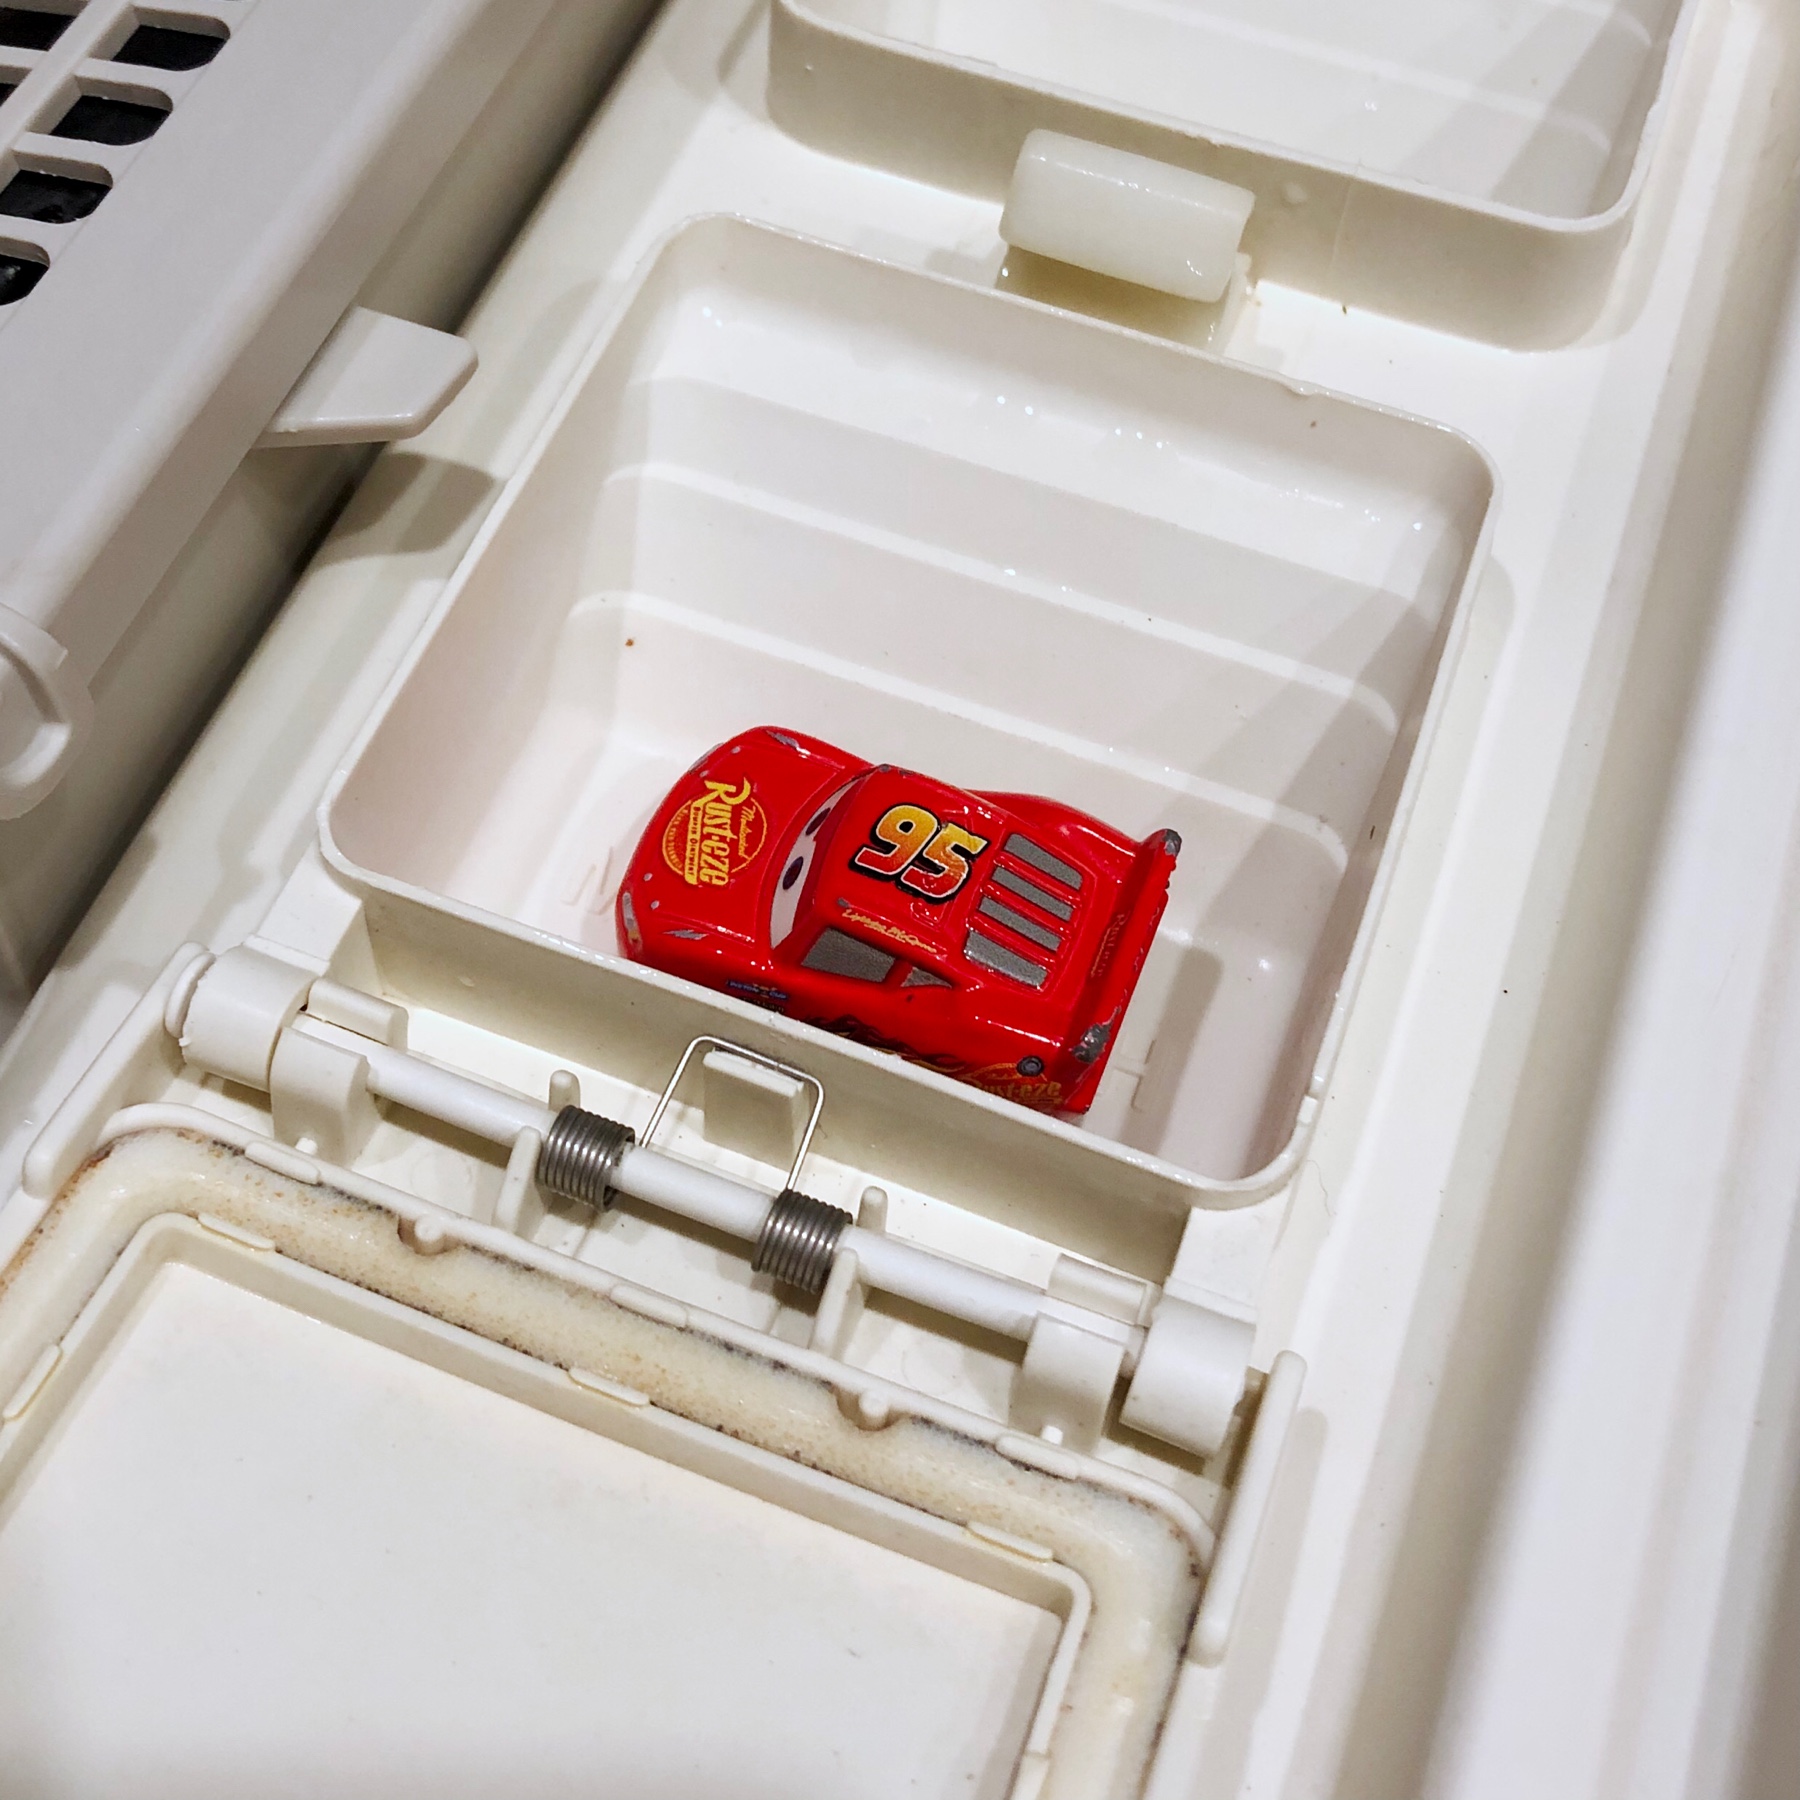 Miniture Lightning McQueen in the dishwasher soap dispenser.